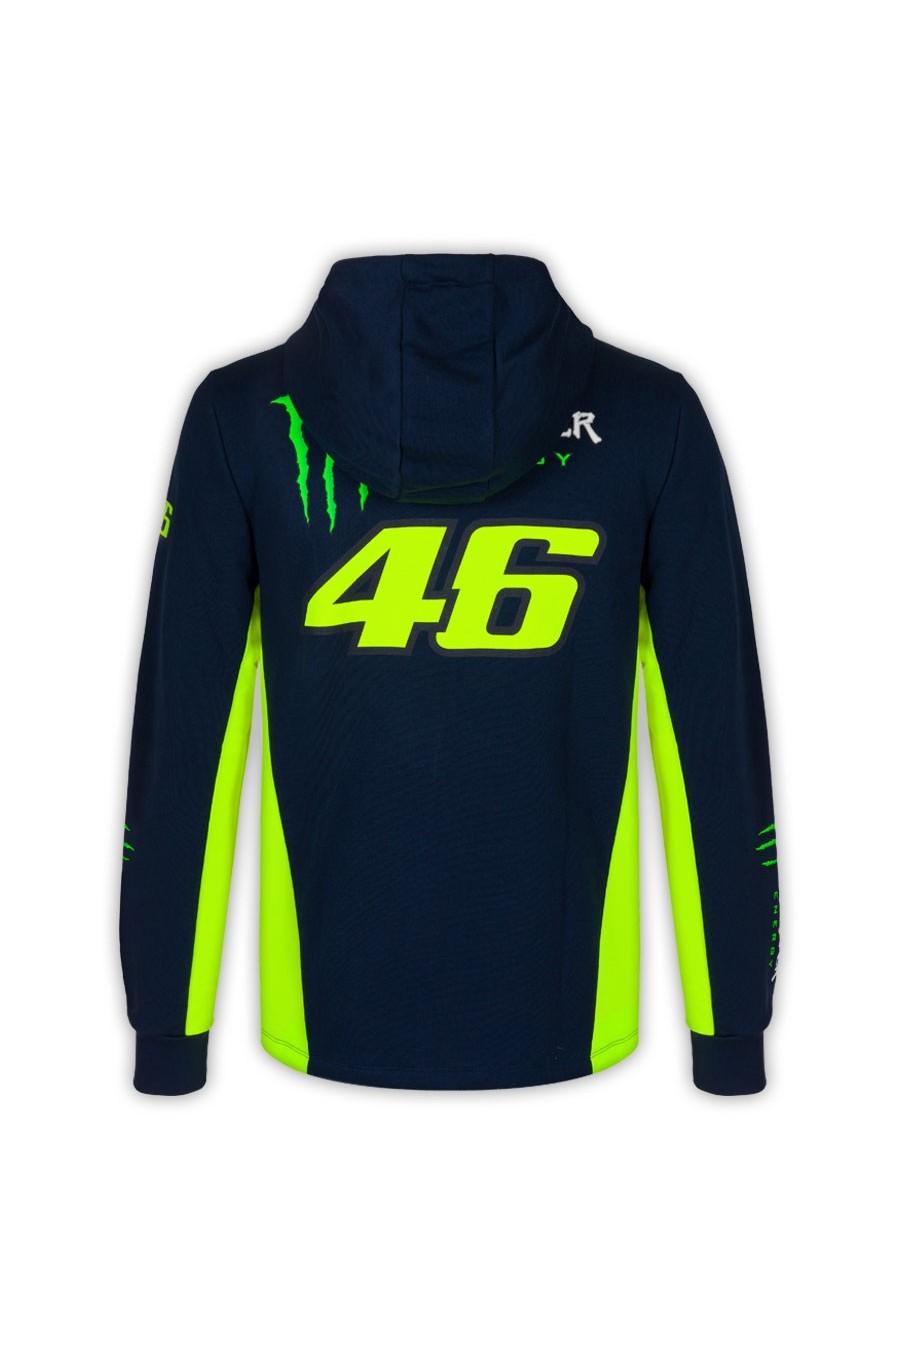 Valentino Rossi 46 Replica-Sweatshirt